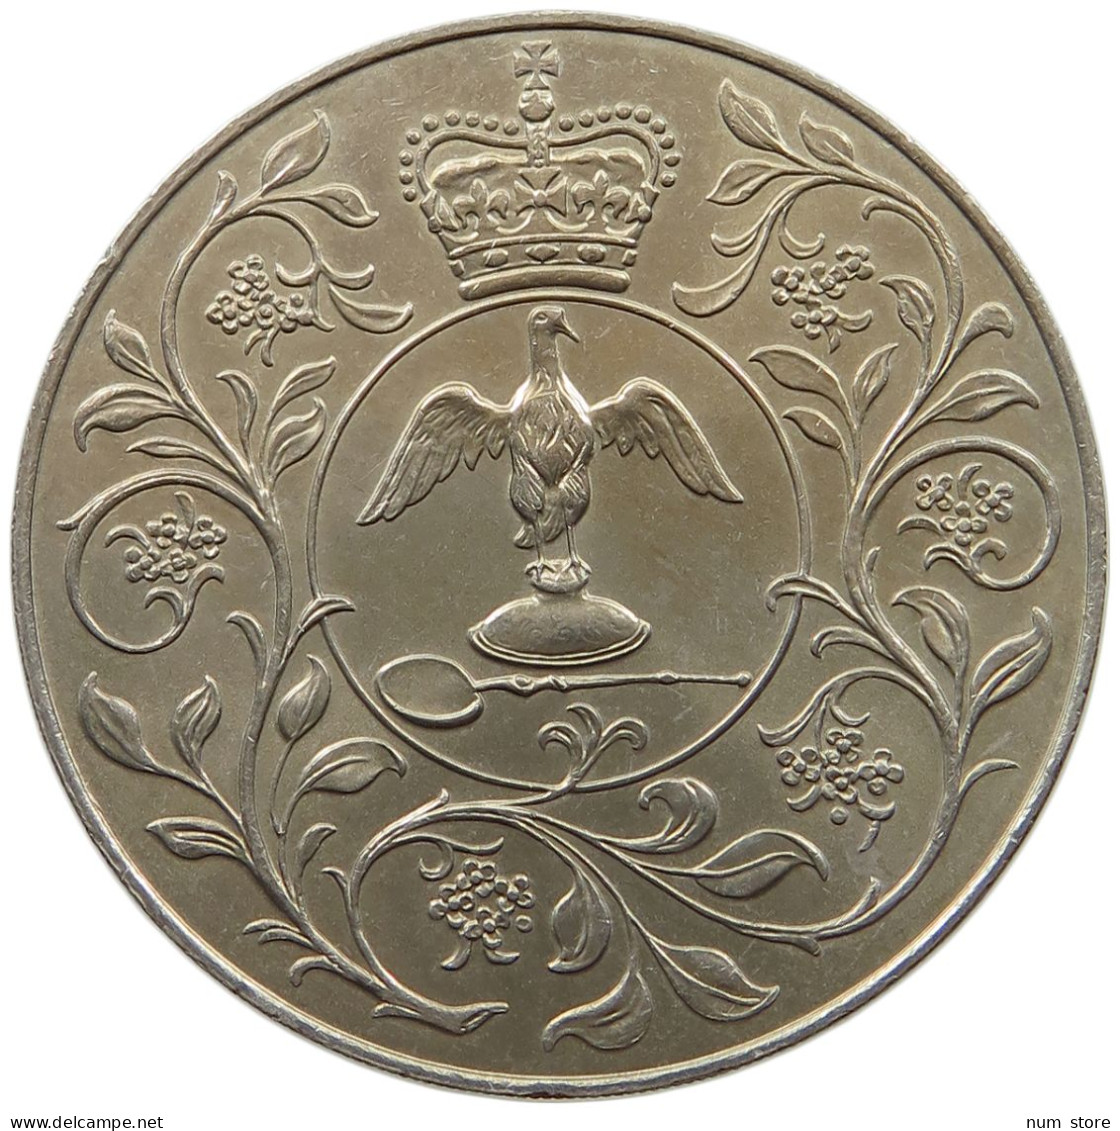 GREAT BRITAIN 5 SHILLINGS 1977 Elisabeth II. (1952-) #a096 0217 - L. 1 Crown